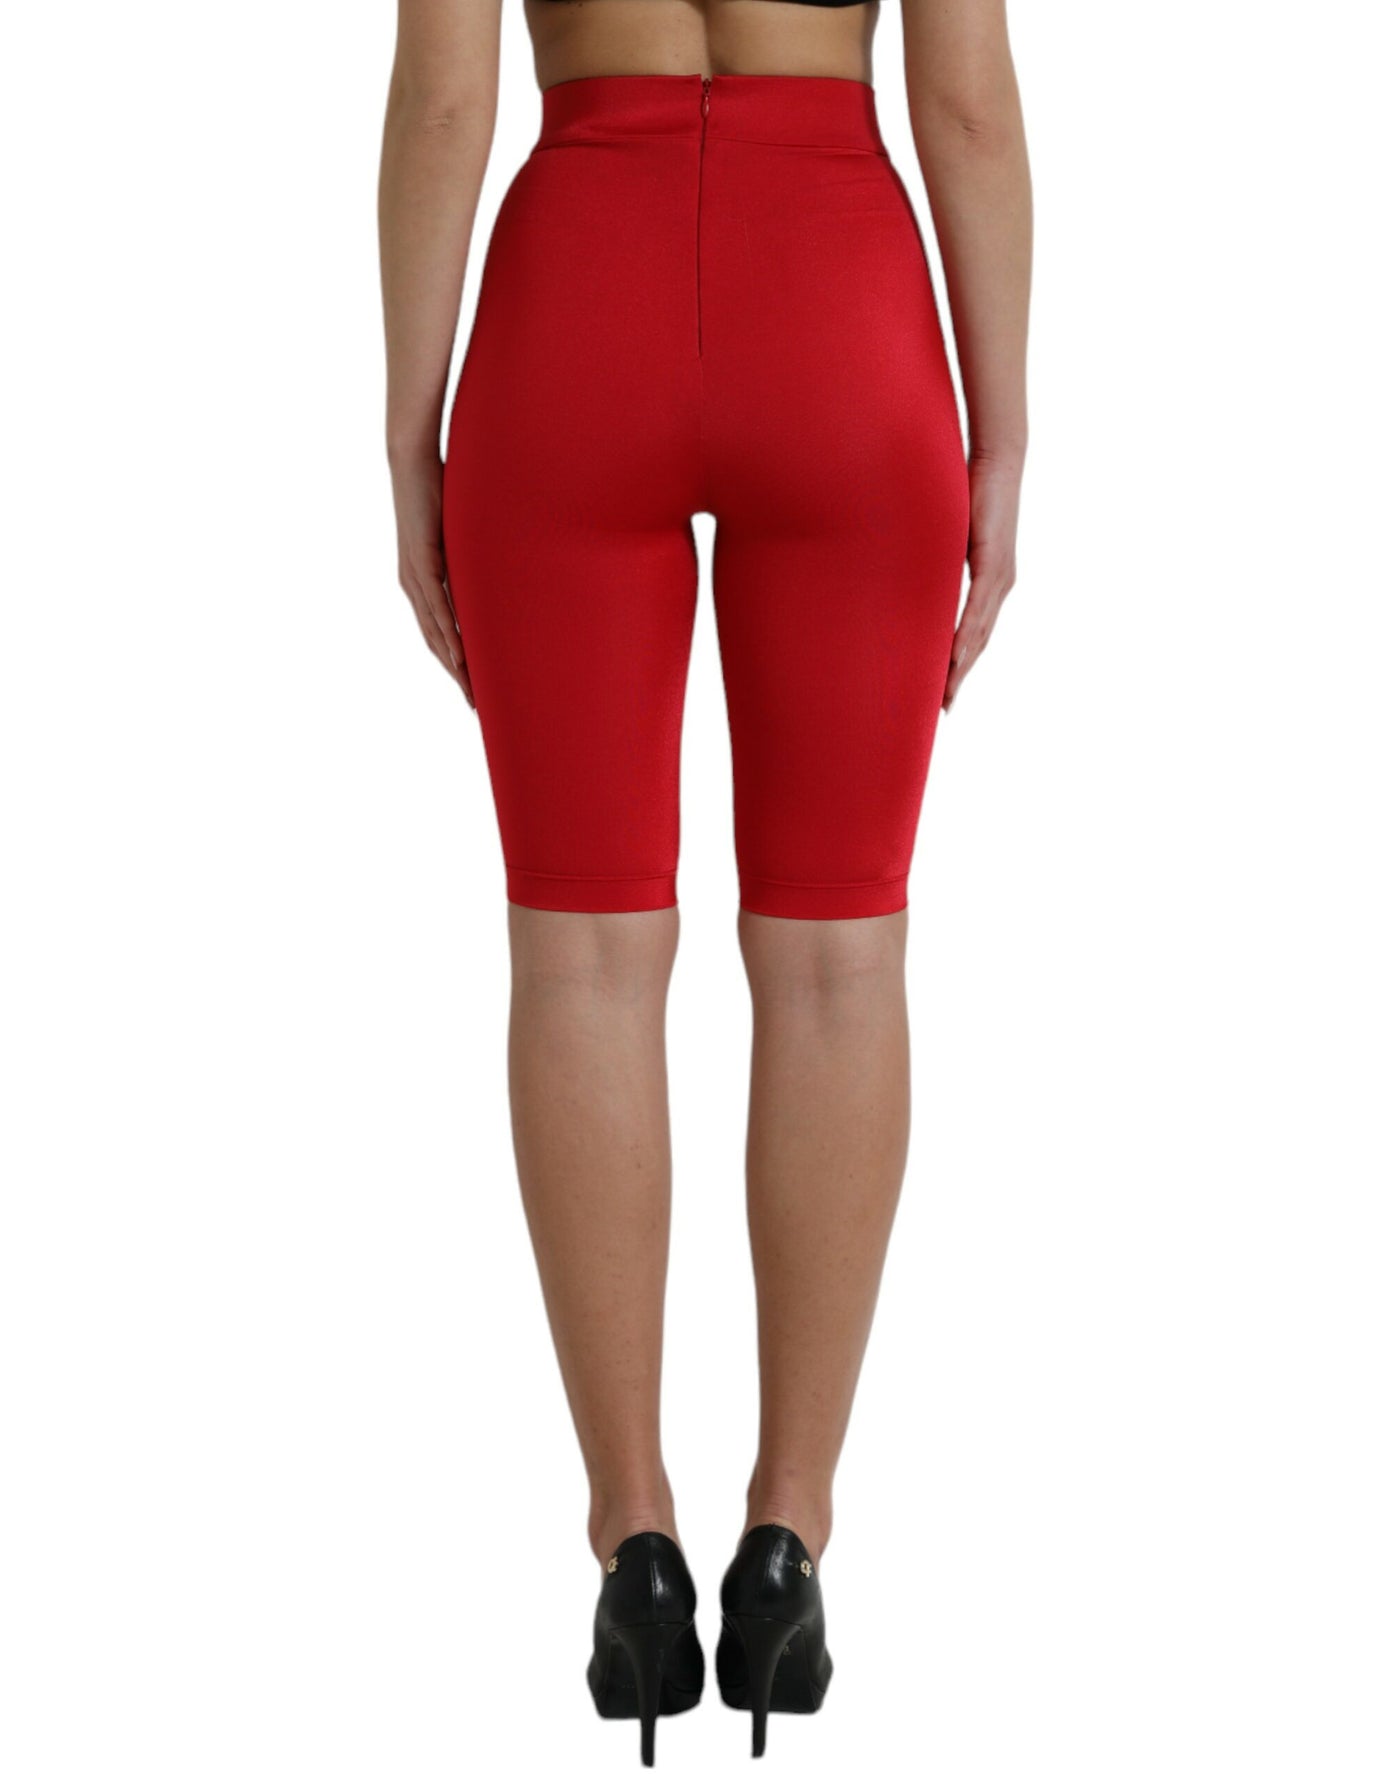 Dolce & Gabbana Chic Red High Waist Leggings Pants